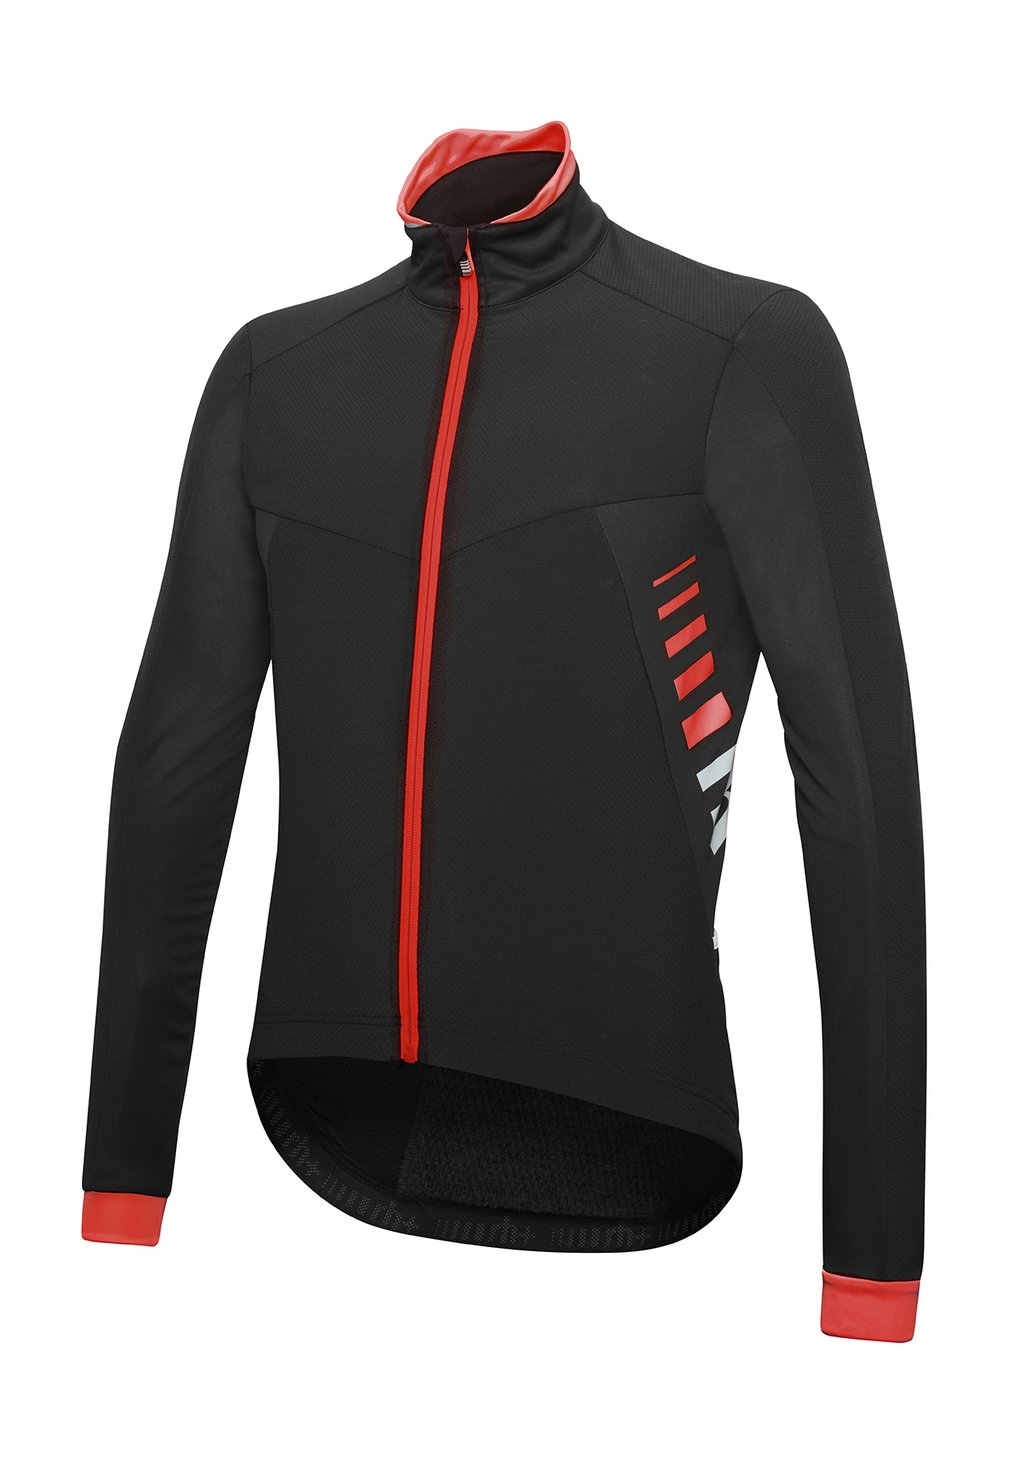 Куртка для бега LOGO ALFA PADDED RH+, цвет black red code reflex